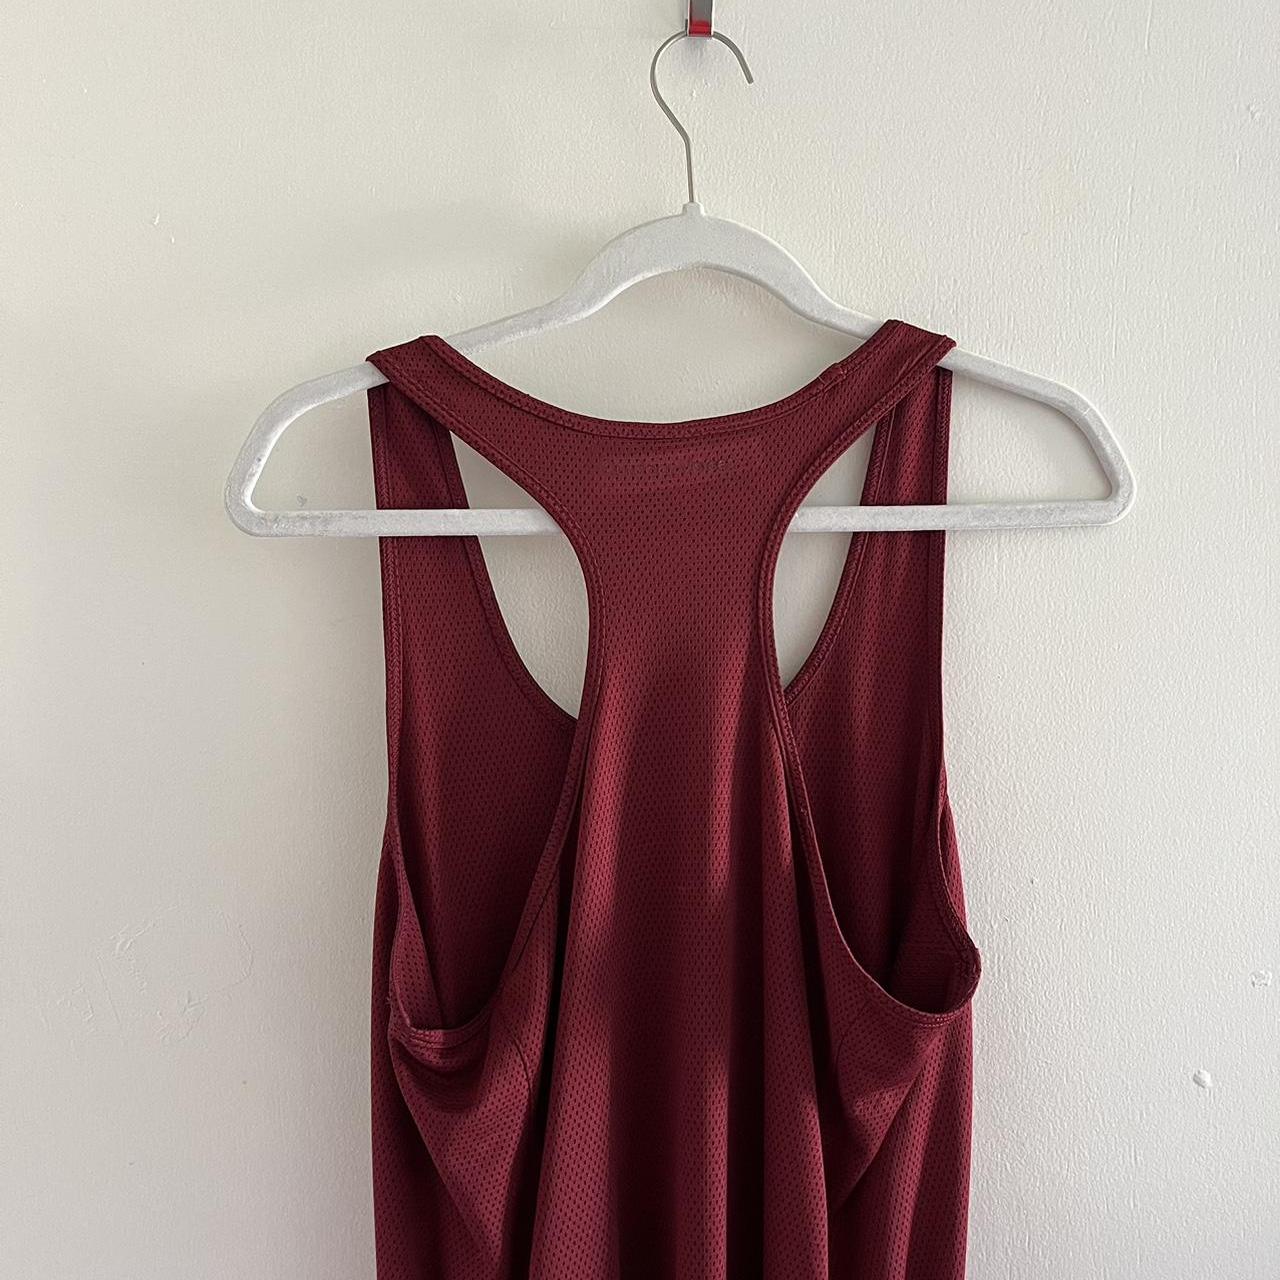 Outdoor Voices Exercise Dress Shiraz maroon burgundy size medium tennis  workout - $60 - From Lauren